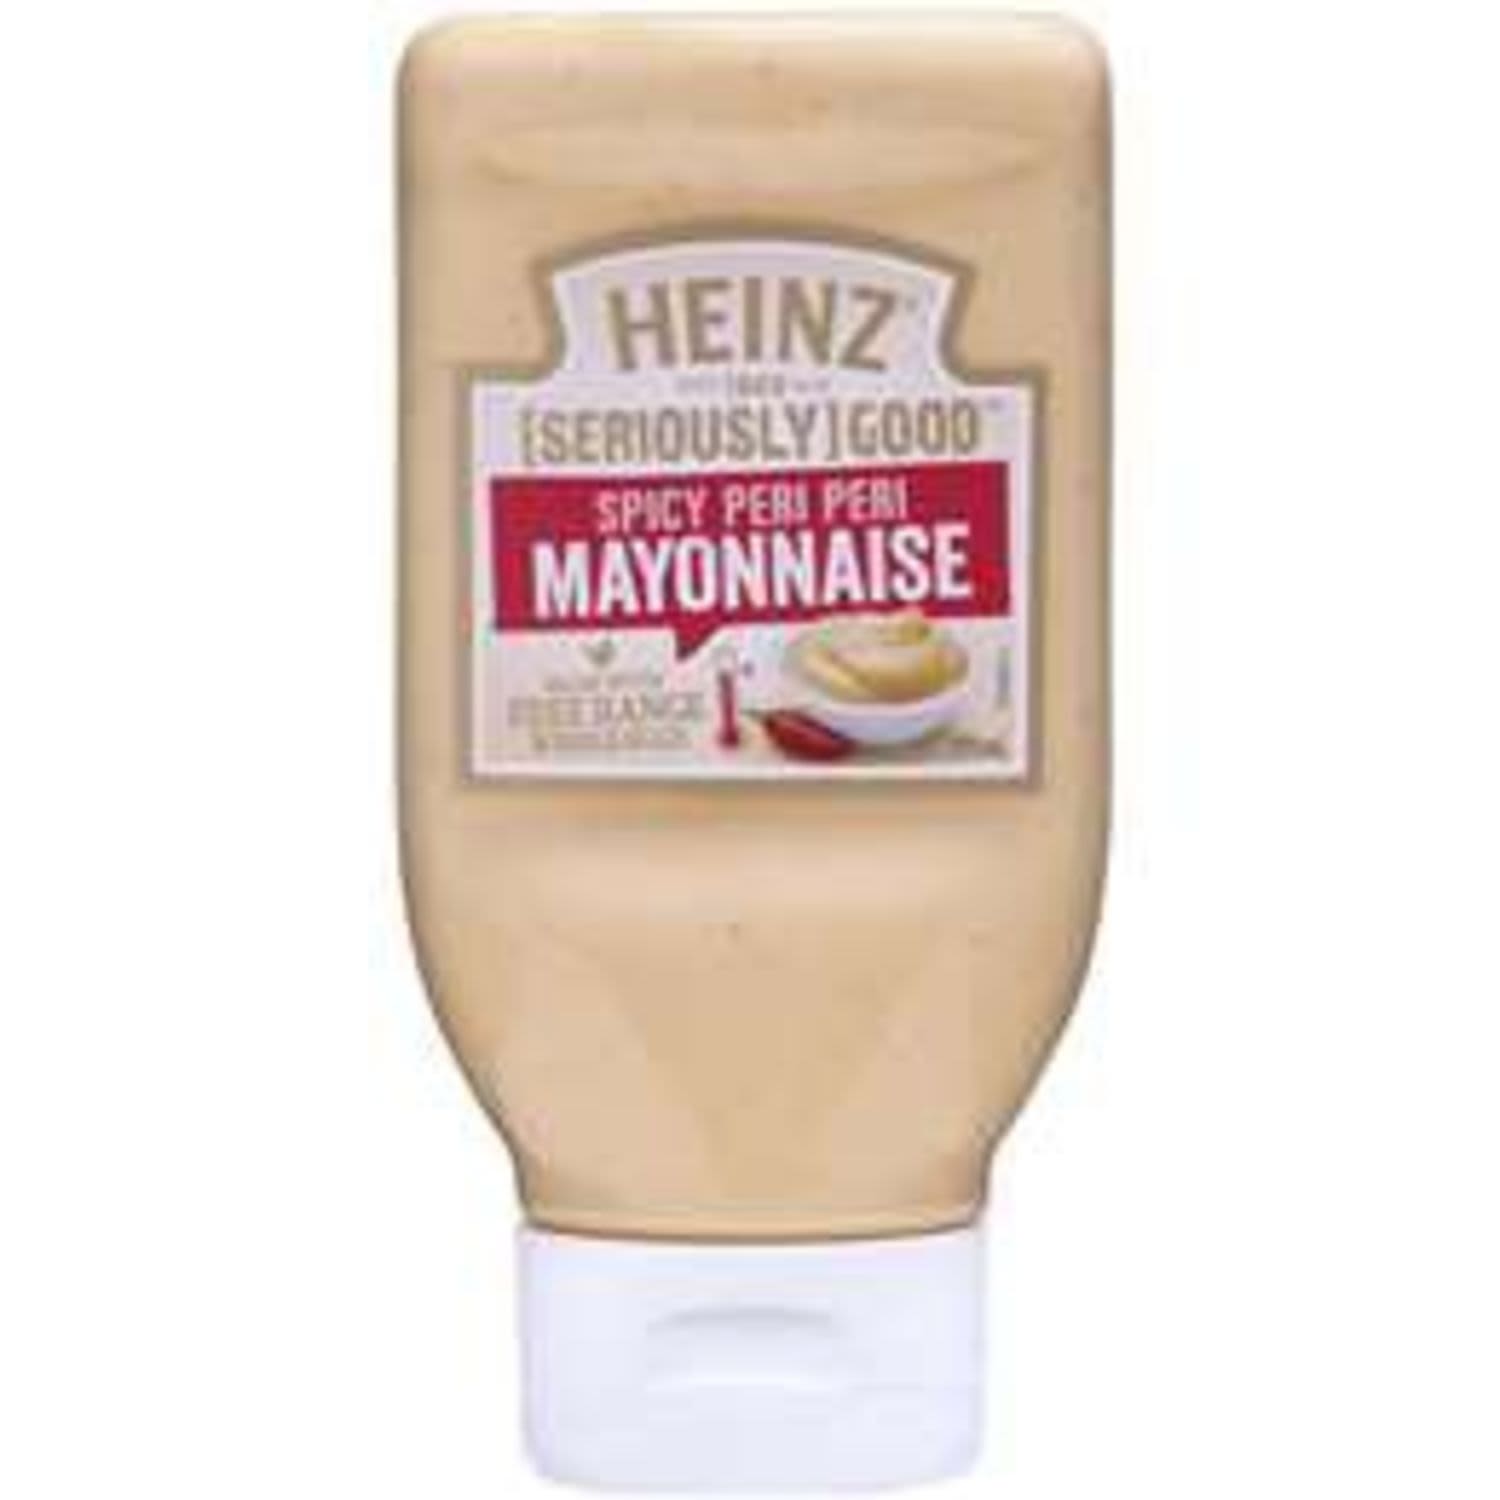 Heinz [Seriously] Good Peri Peri Spicy Mayonnaise, 295 Millilitre